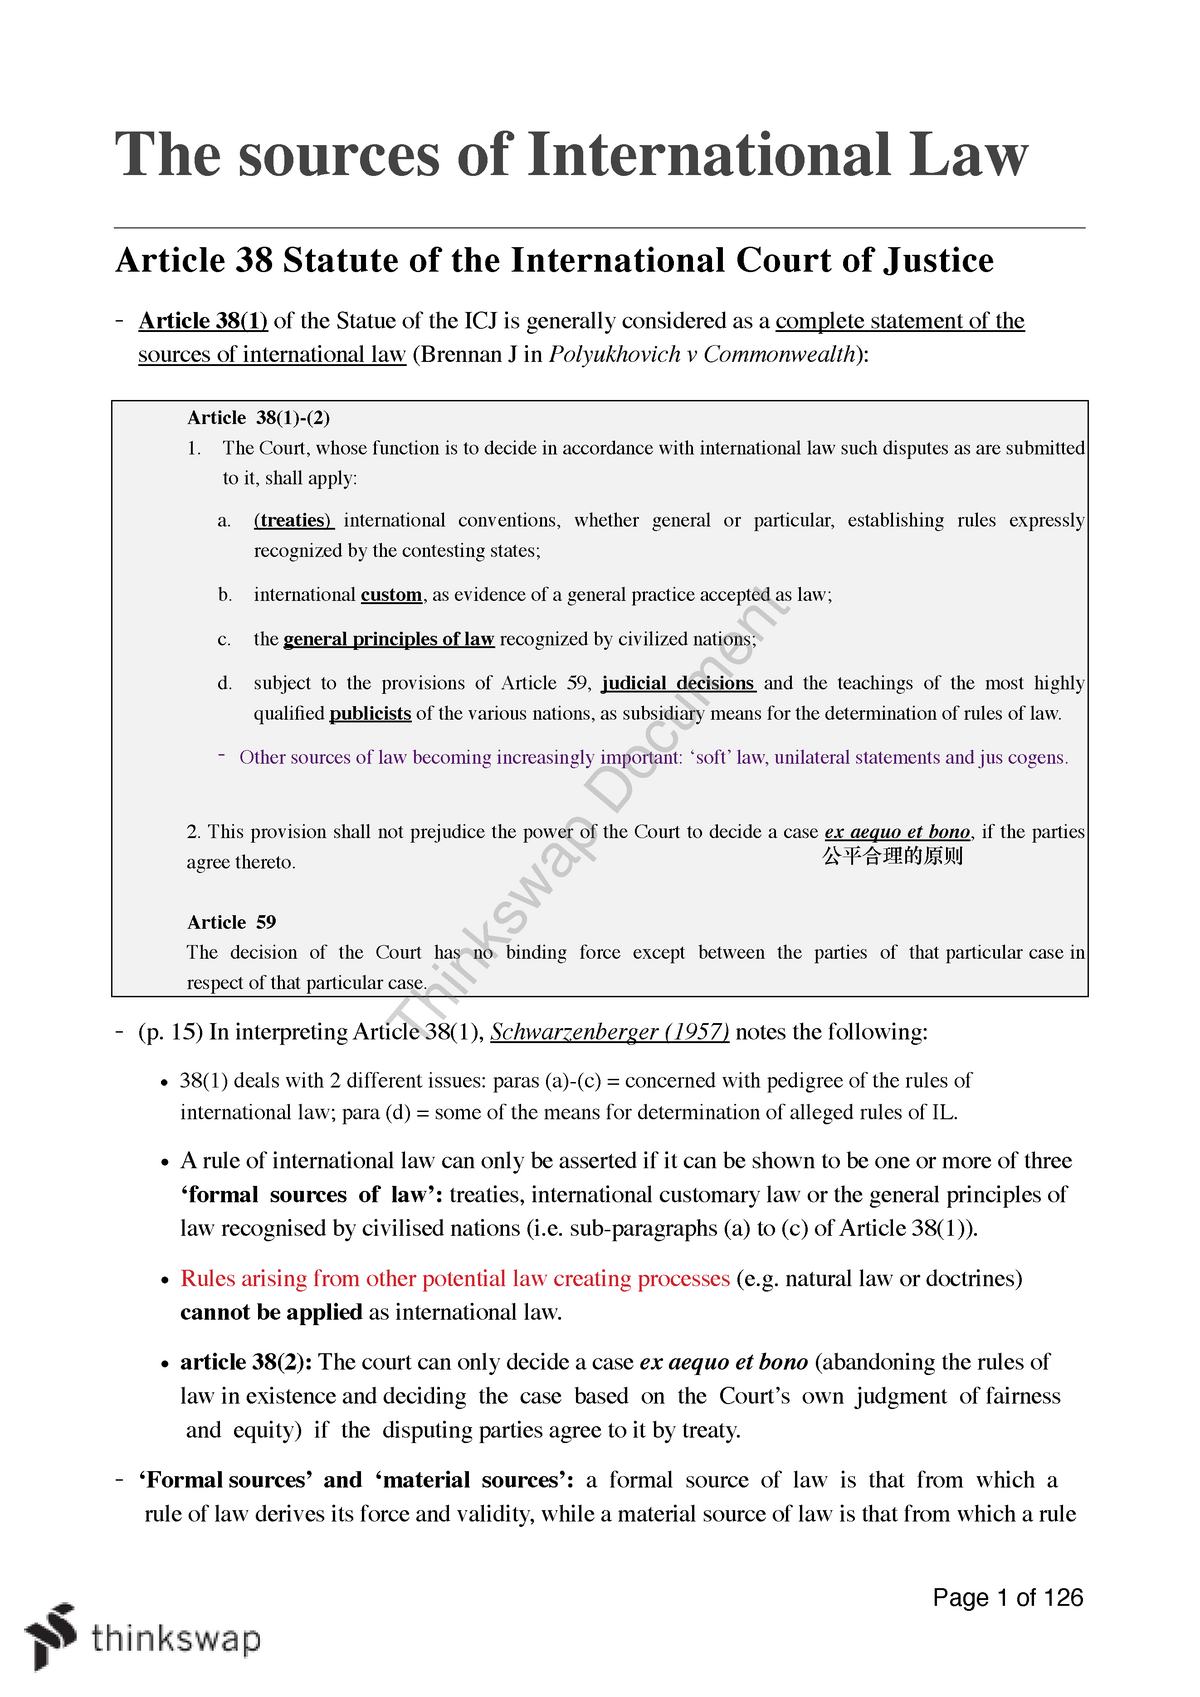 dissertation on international law